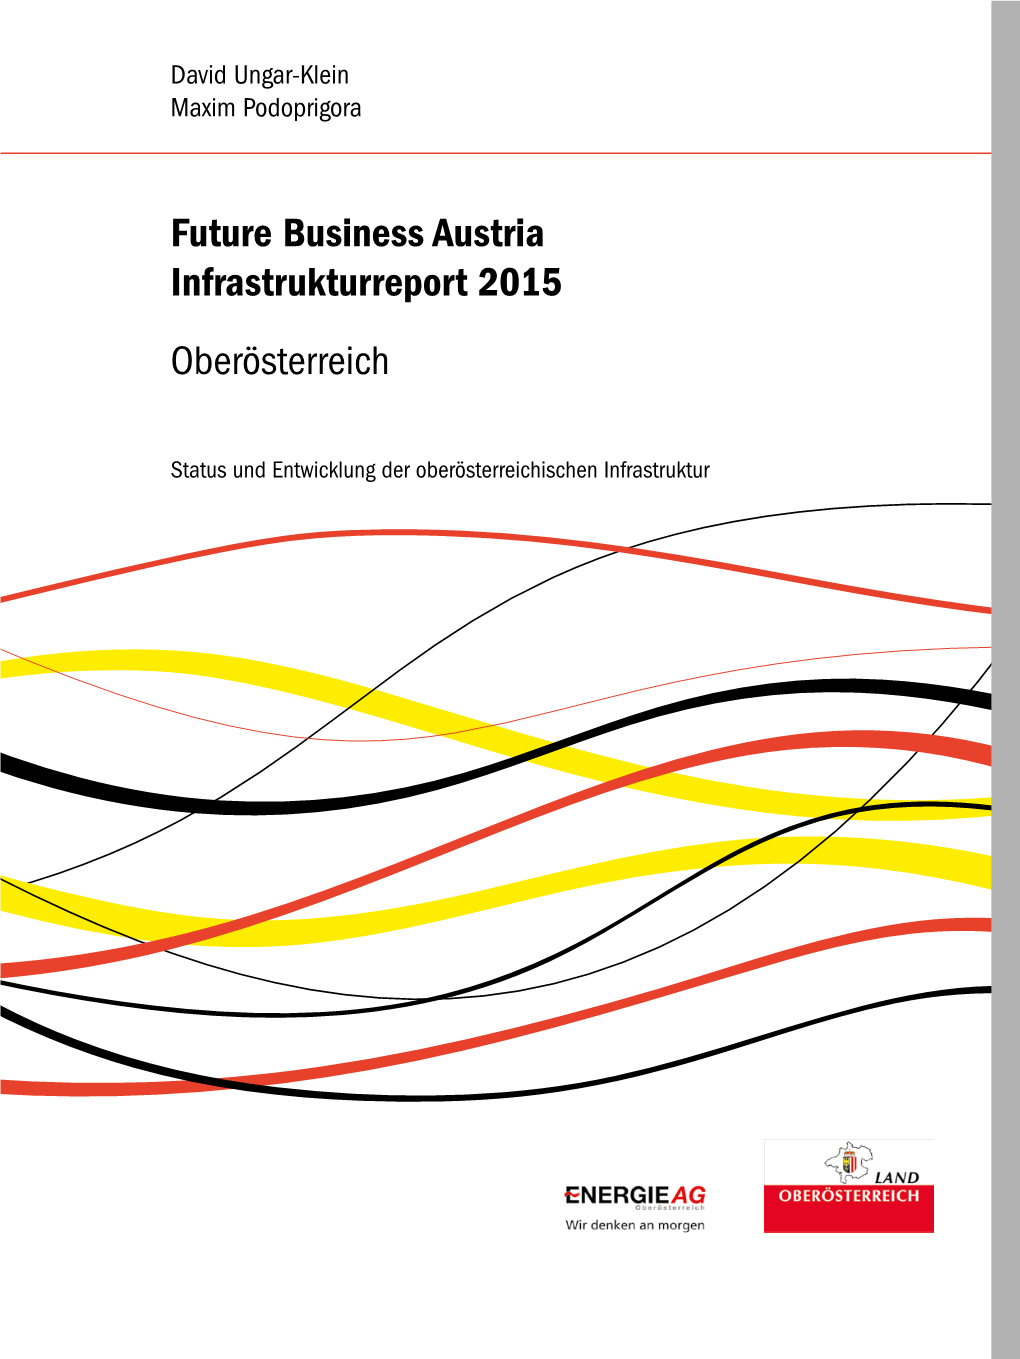 Future Business Austria Infrastrukturreport 2015